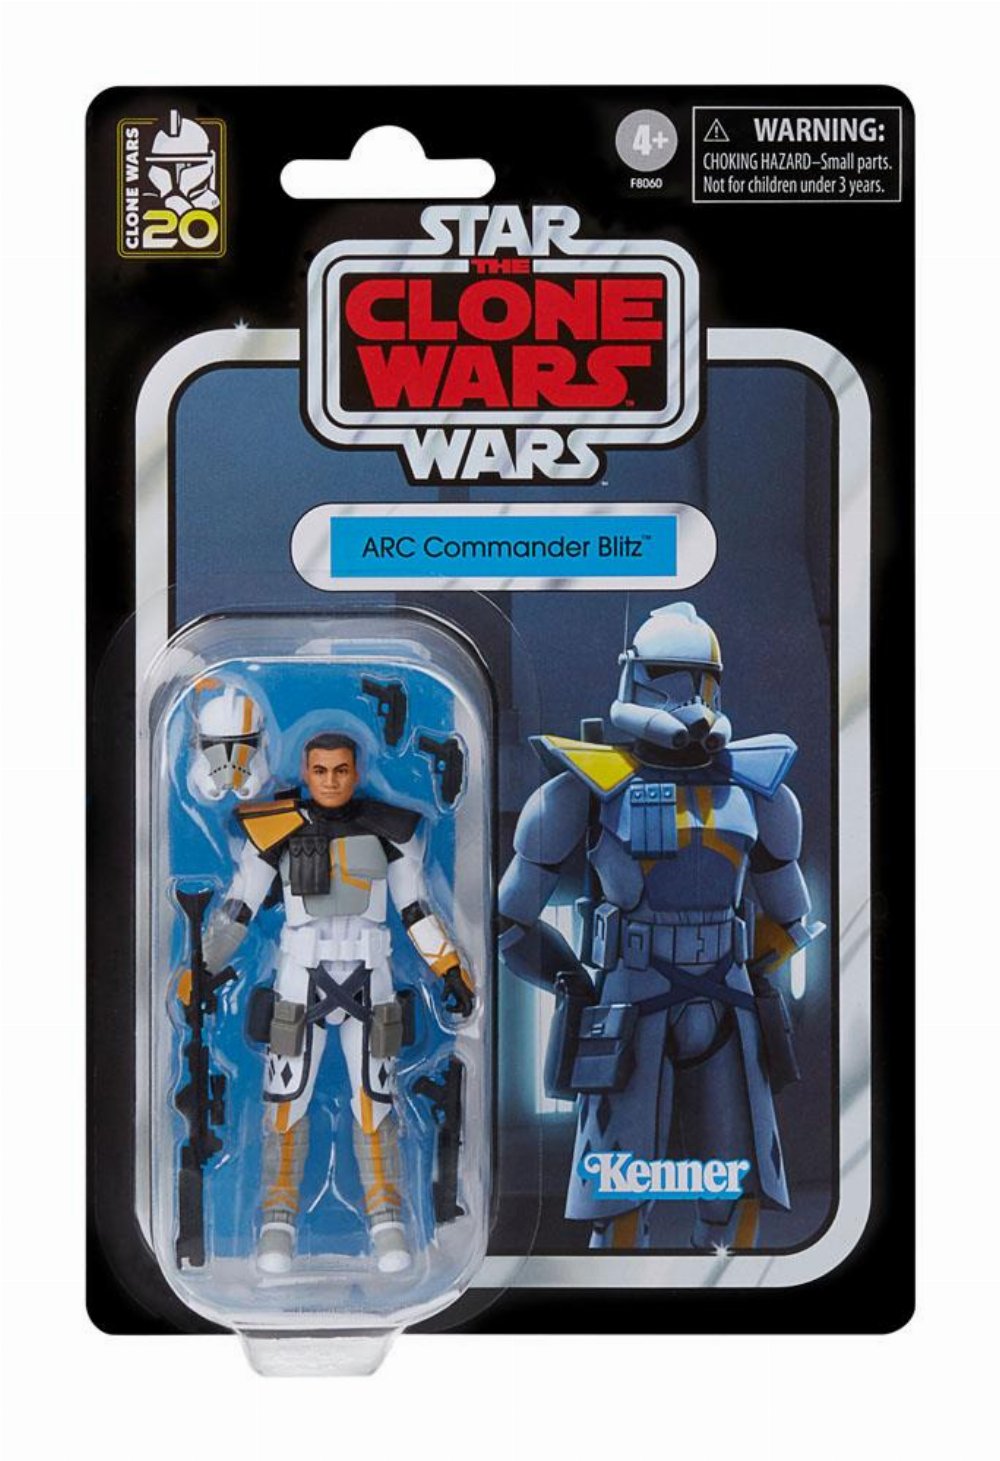 Star Wars - : 600 autocollants star wars the clone wars